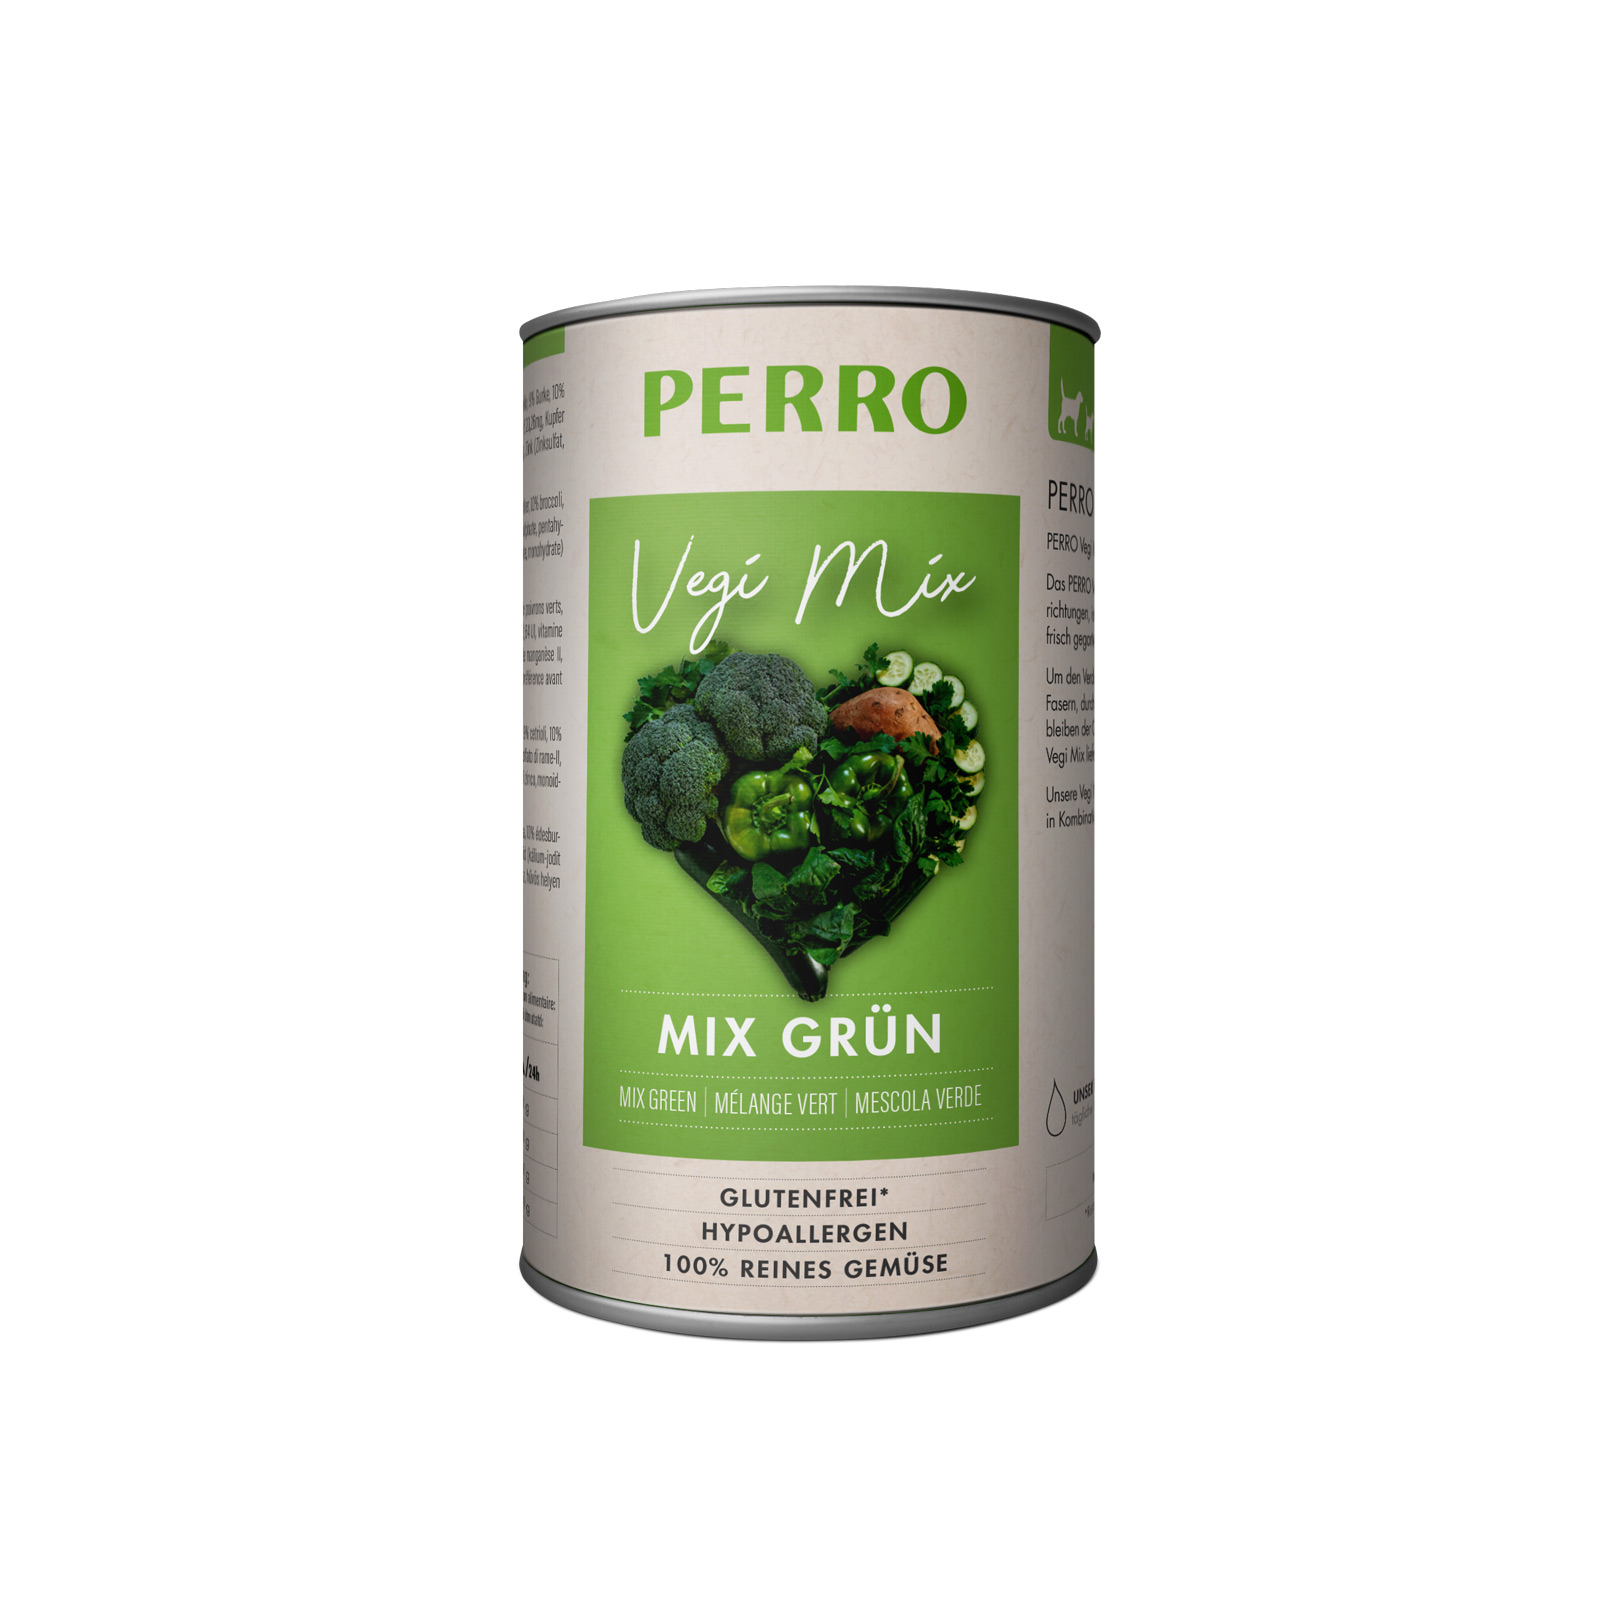 PERRO Vegi Mix Grün